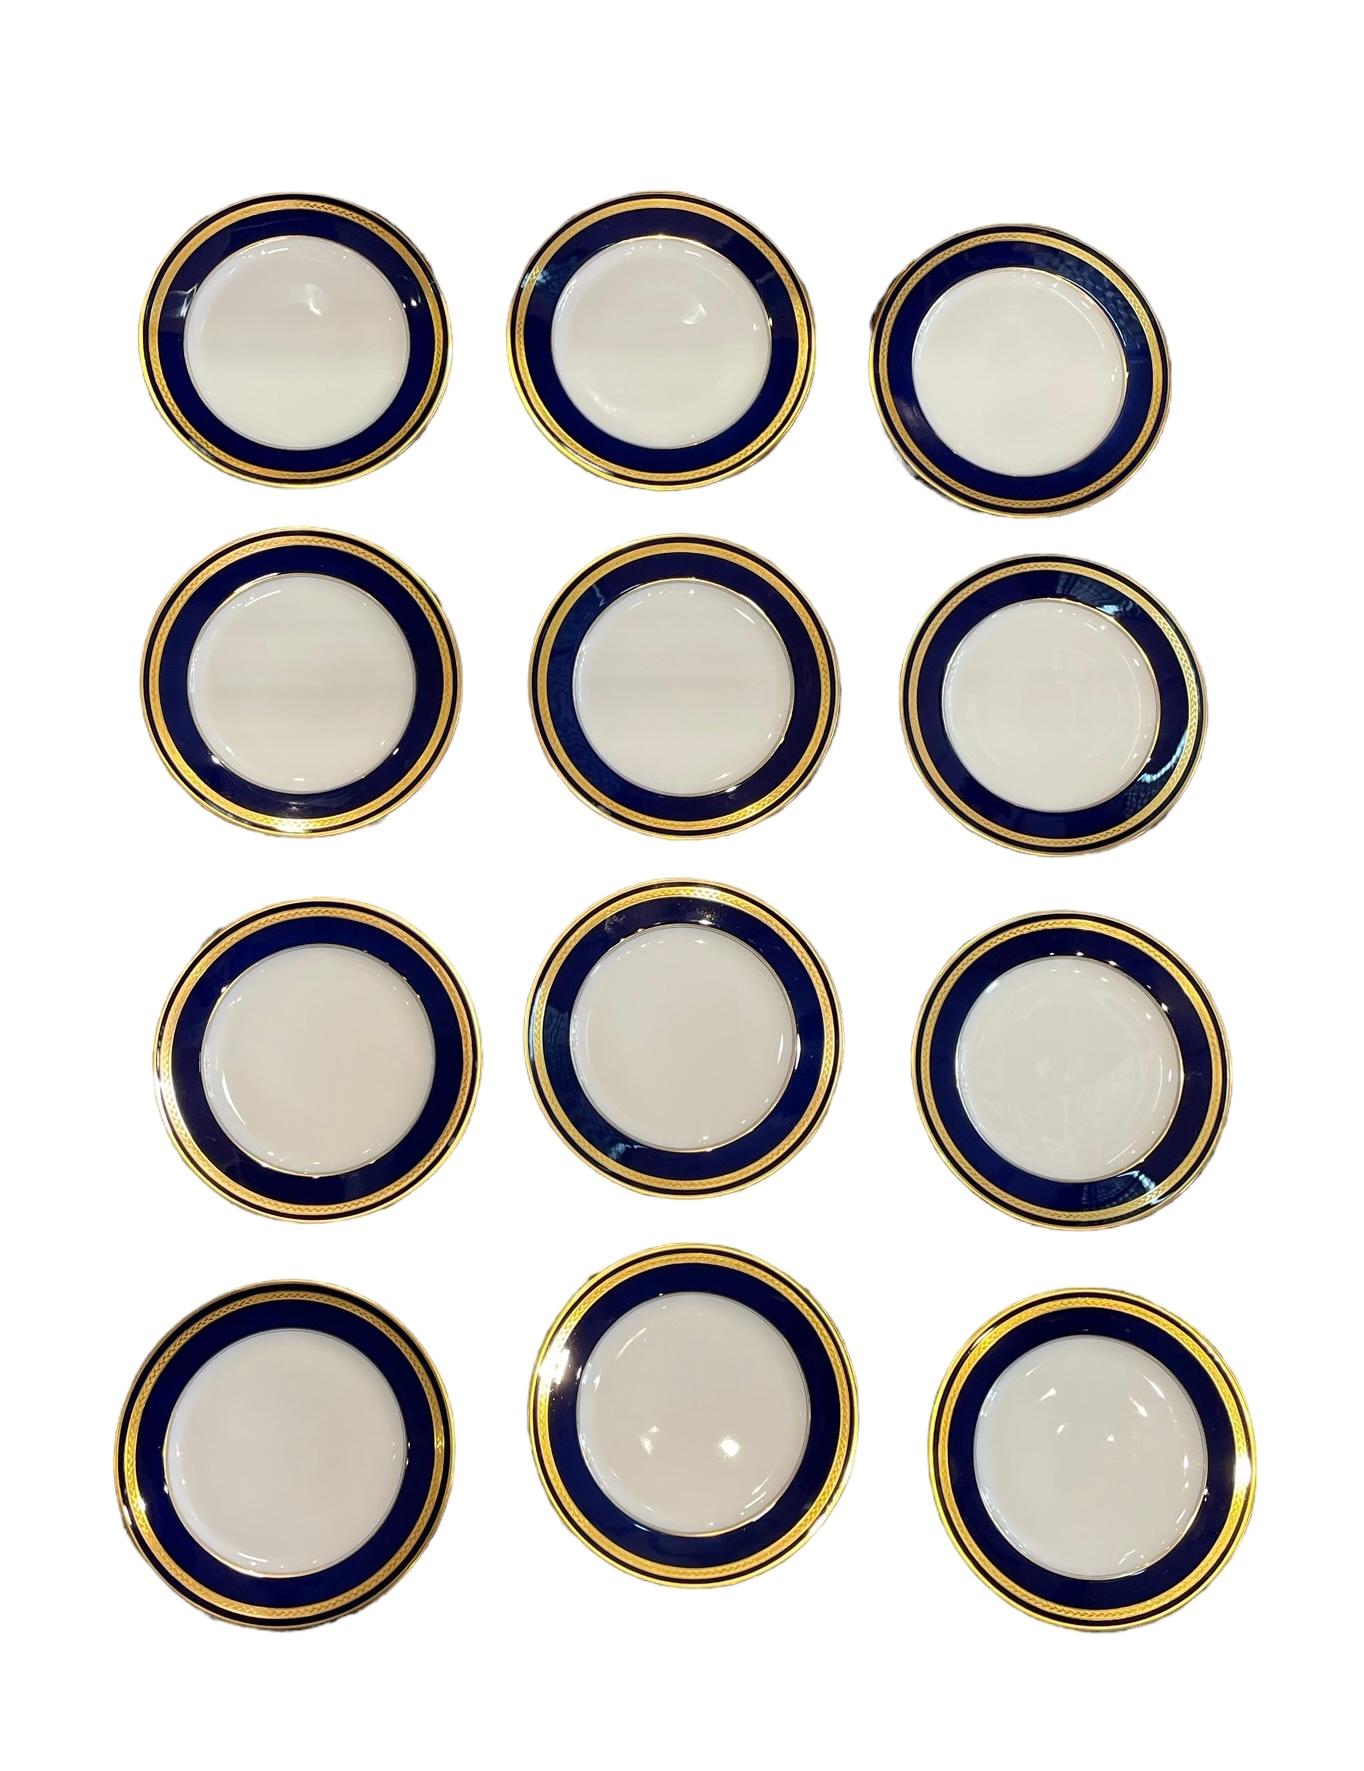 Lorenz Hutschenreuter, Monarch Set of 12 Dinner Plates and 12 Salad Plates For Sale 6